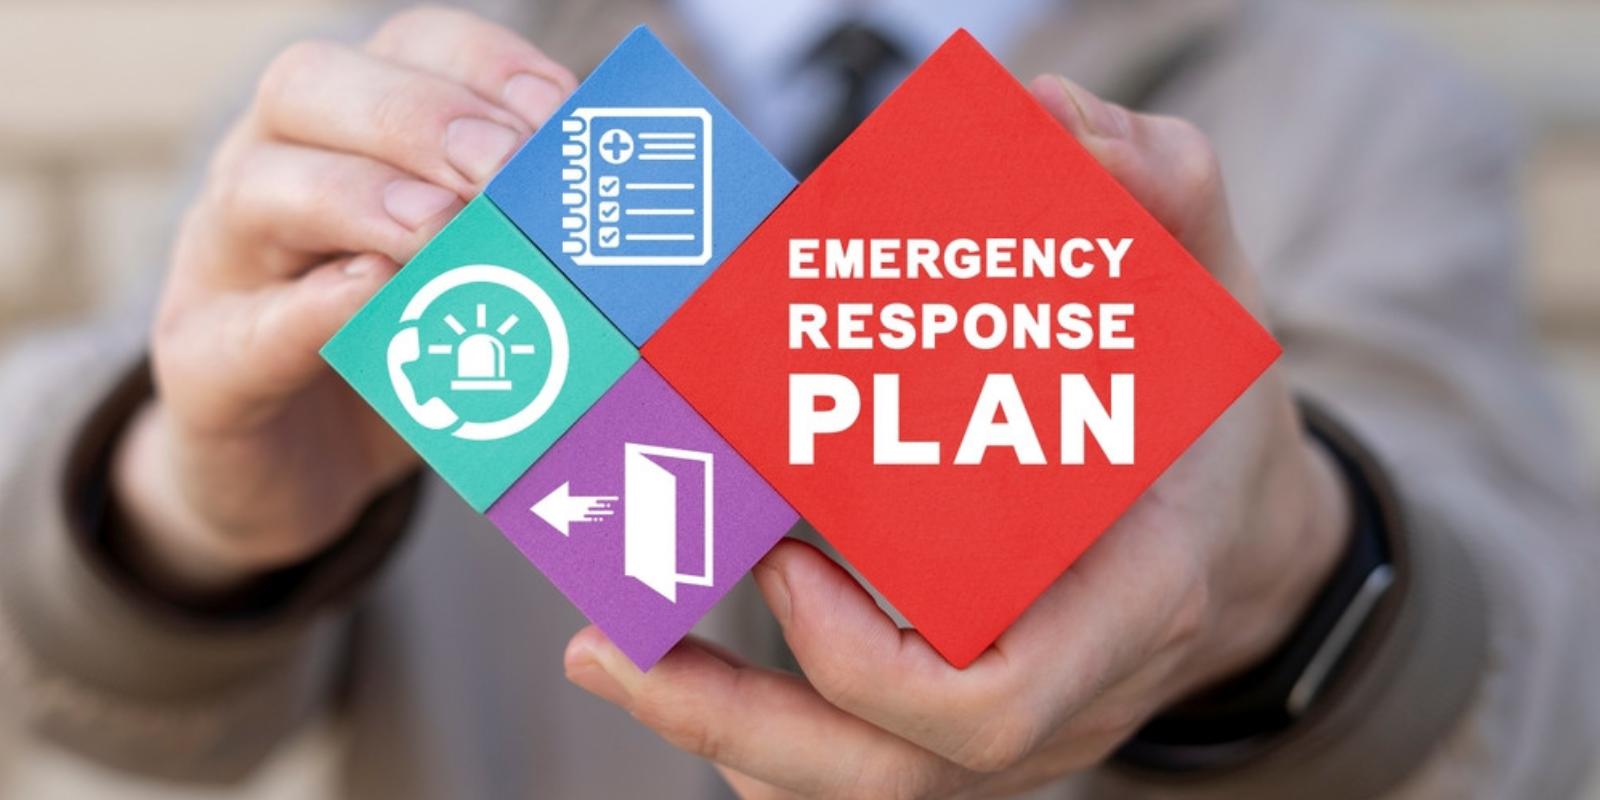 Emergency Response Plan Training Services in Calgary